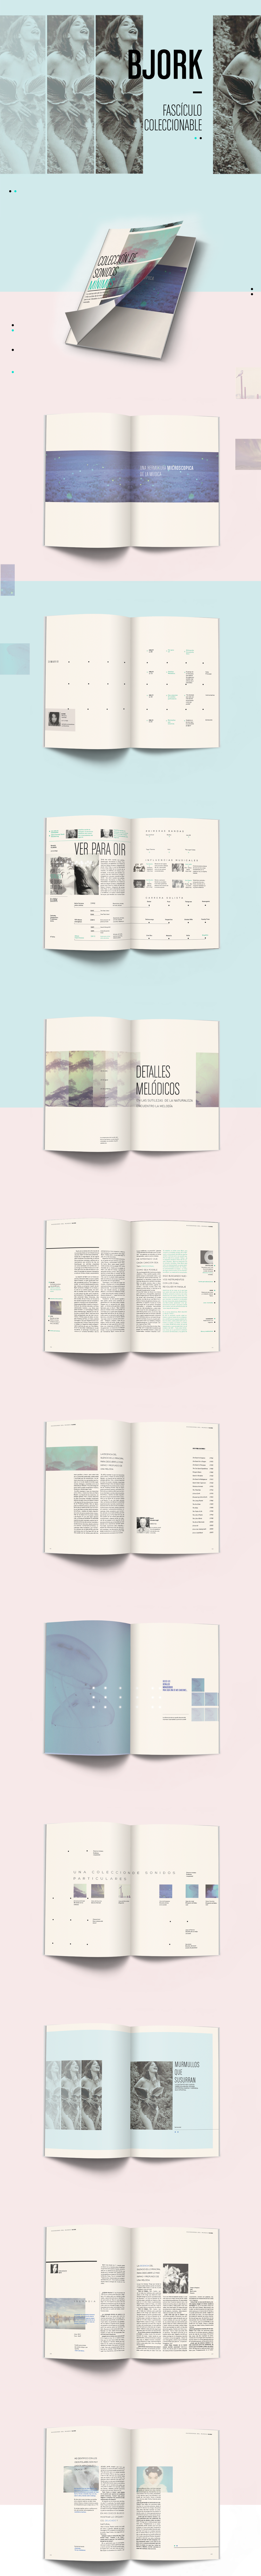 diseño editorial fadu Gabriele magazine revista fasciculo bjork musica sounds